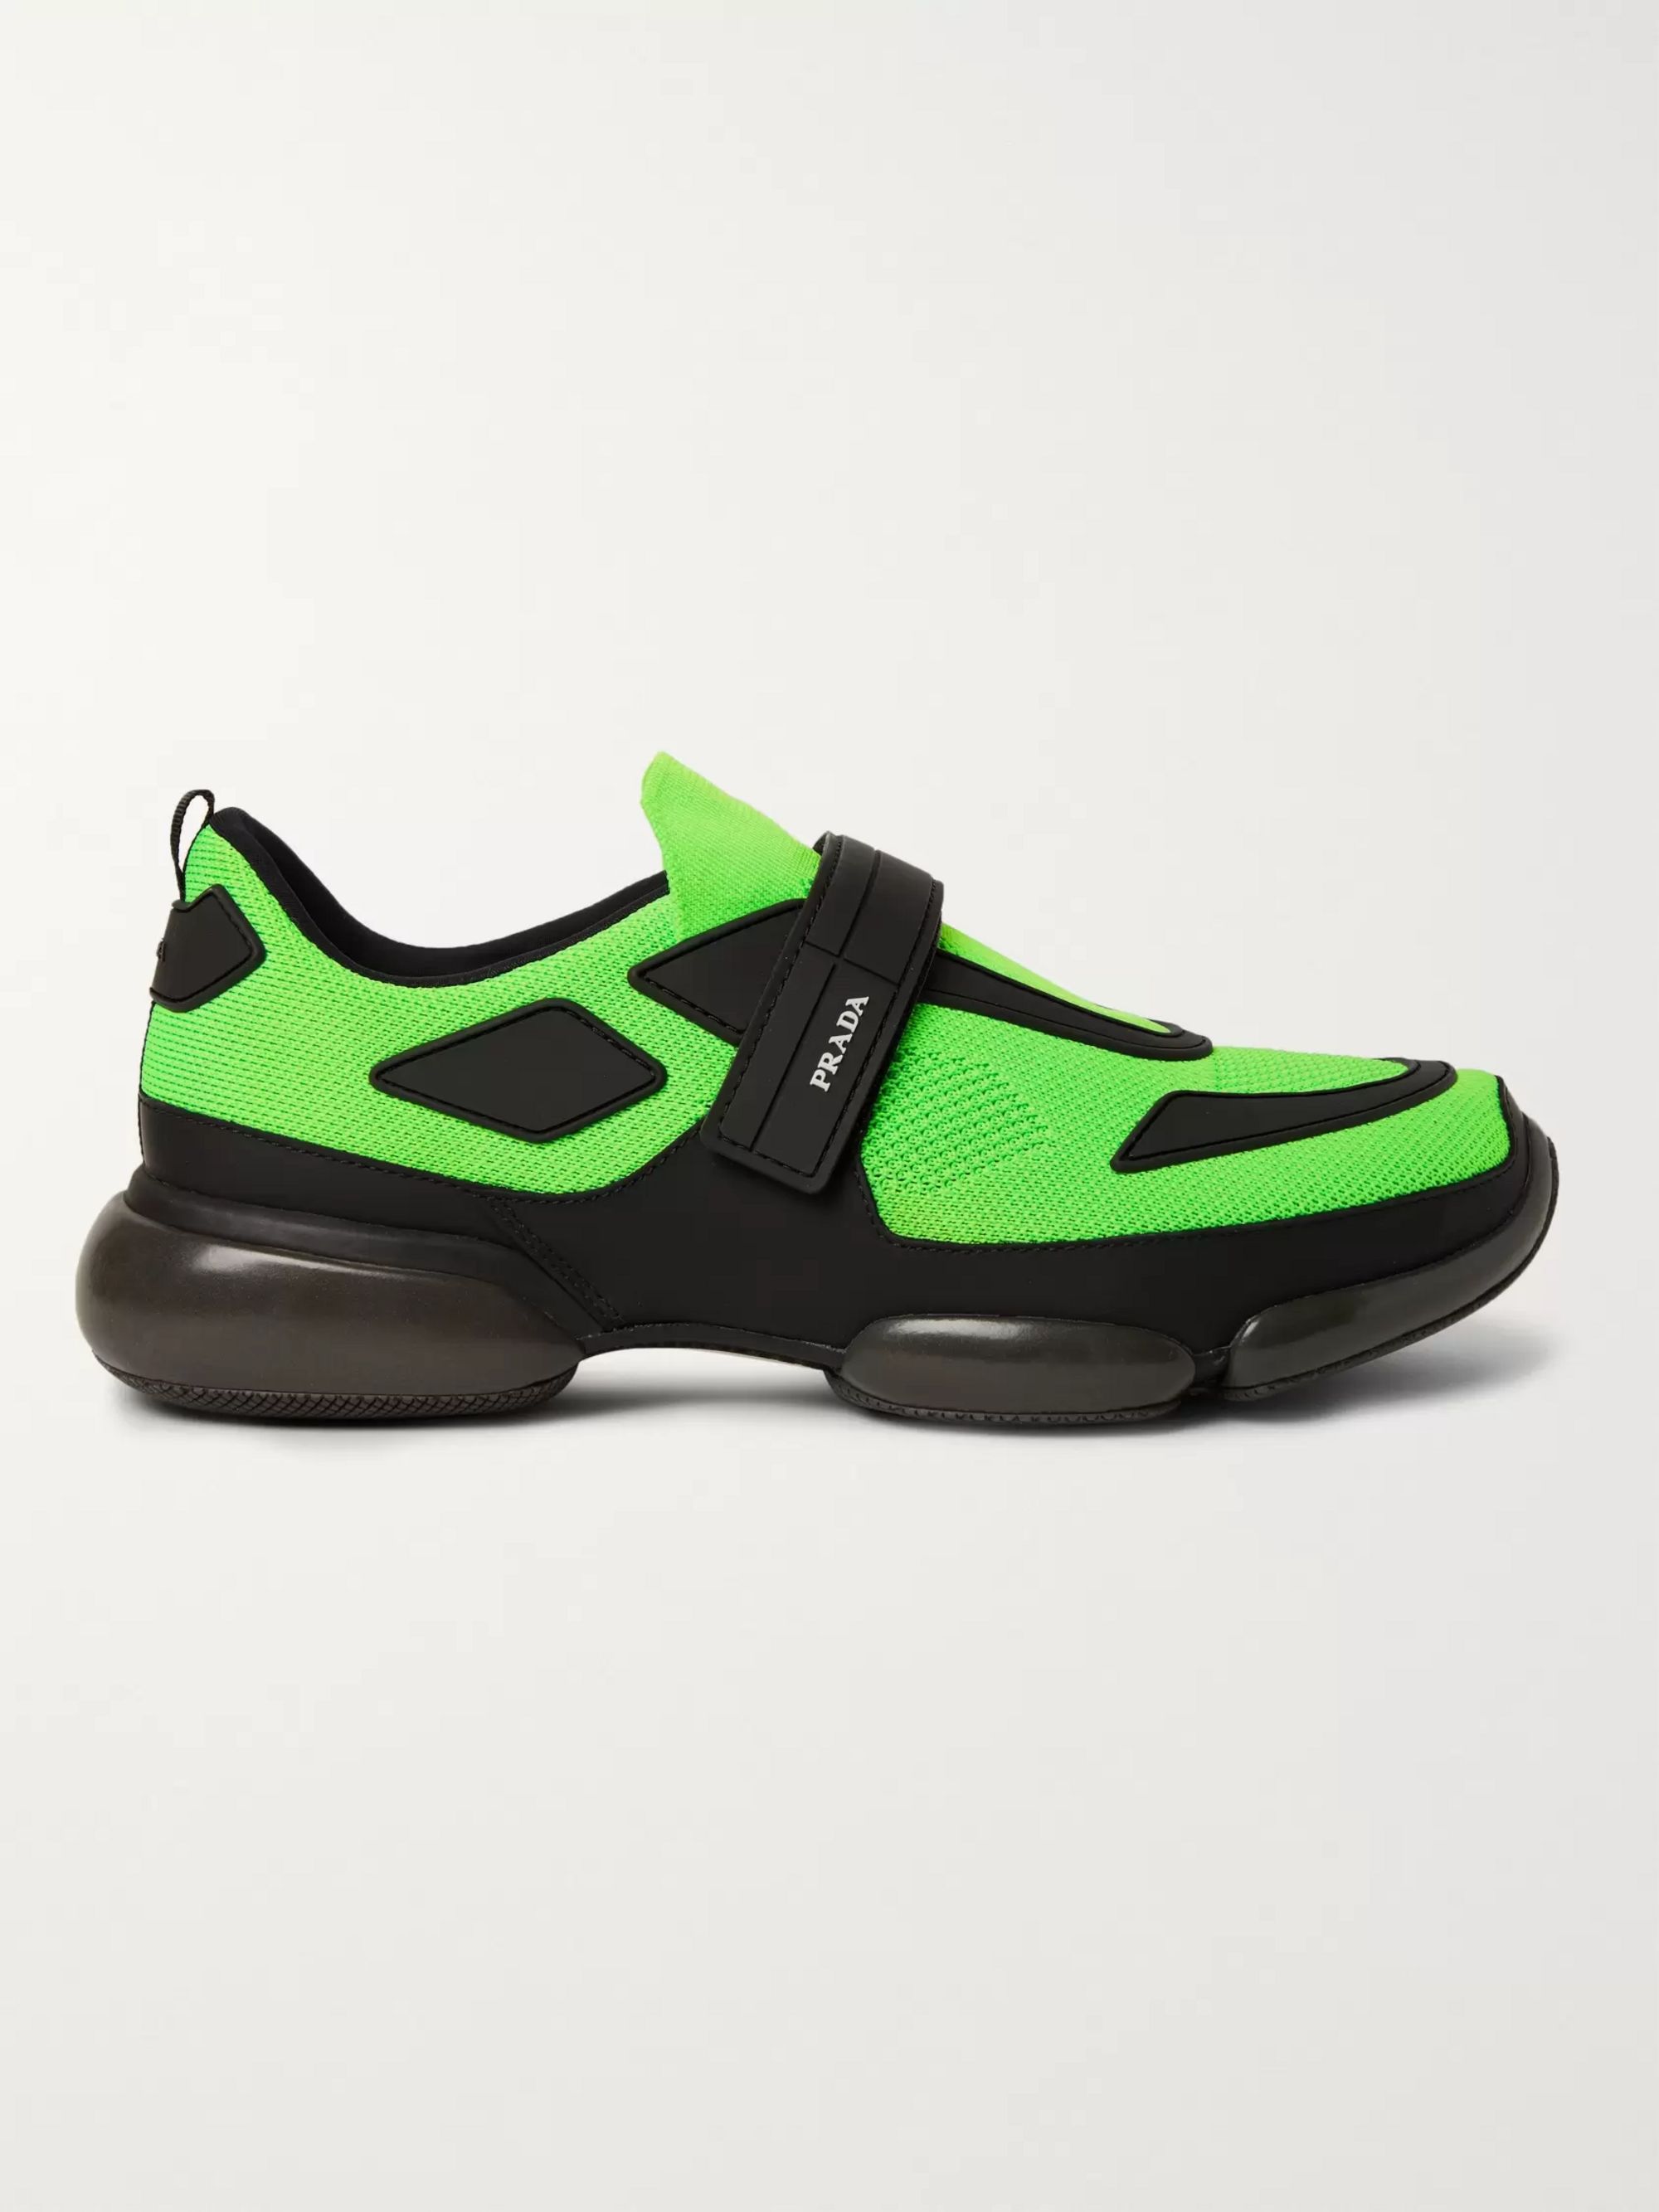 prada lime green sneakers off 54% - www 